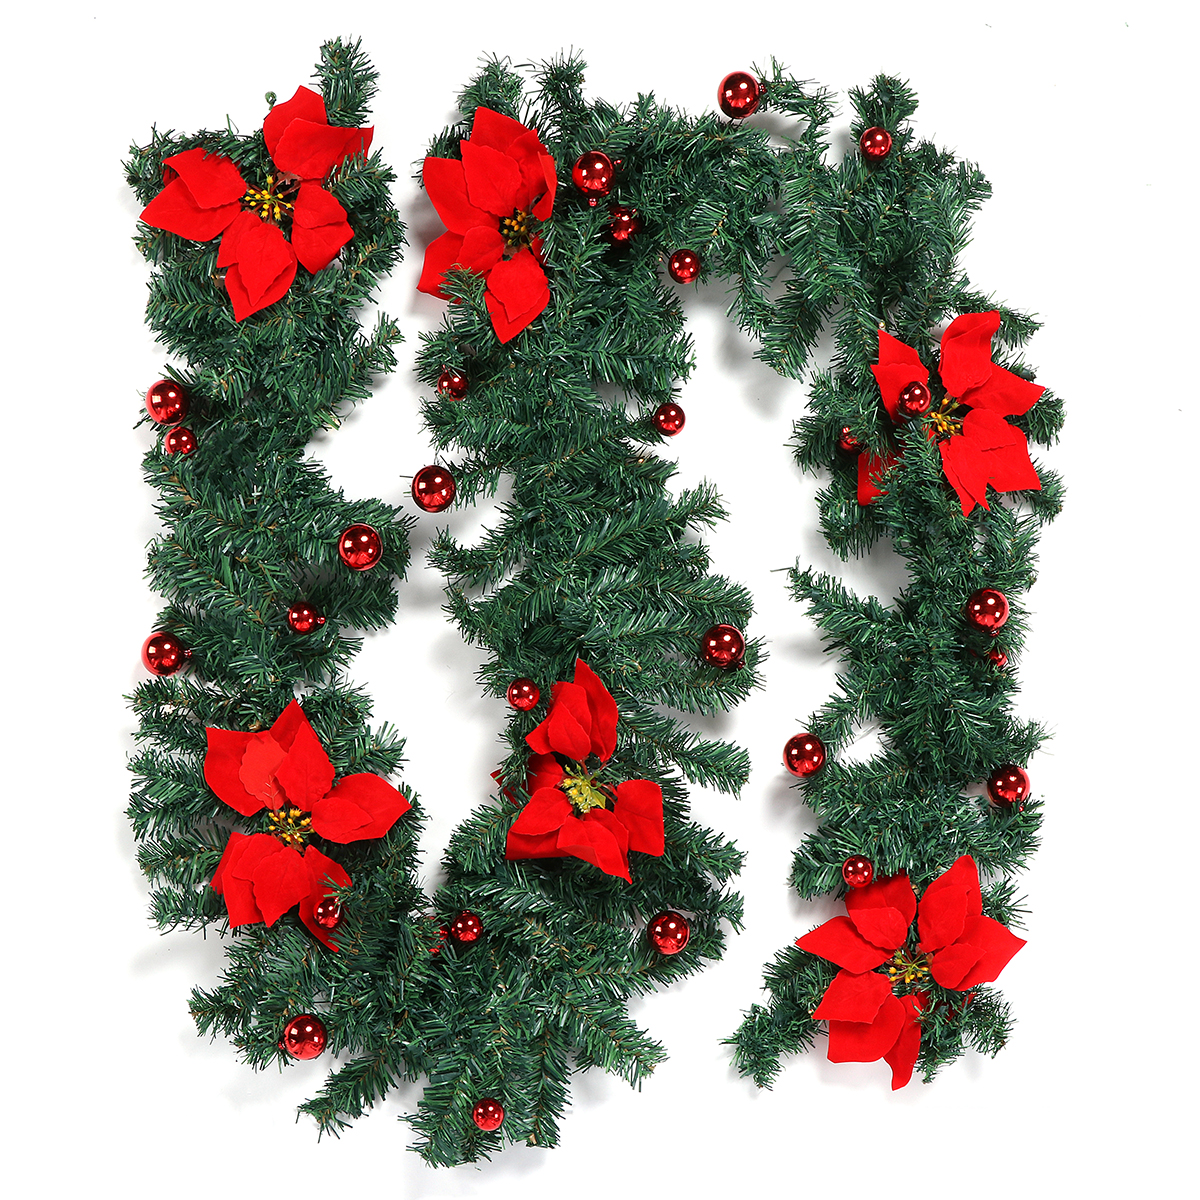 27m-Christmas-Tree-Wreath-Door-Hanging-Garland-Window-Ornament-Xmas-Party-Decor-Christmas-Decoration-1771839-16